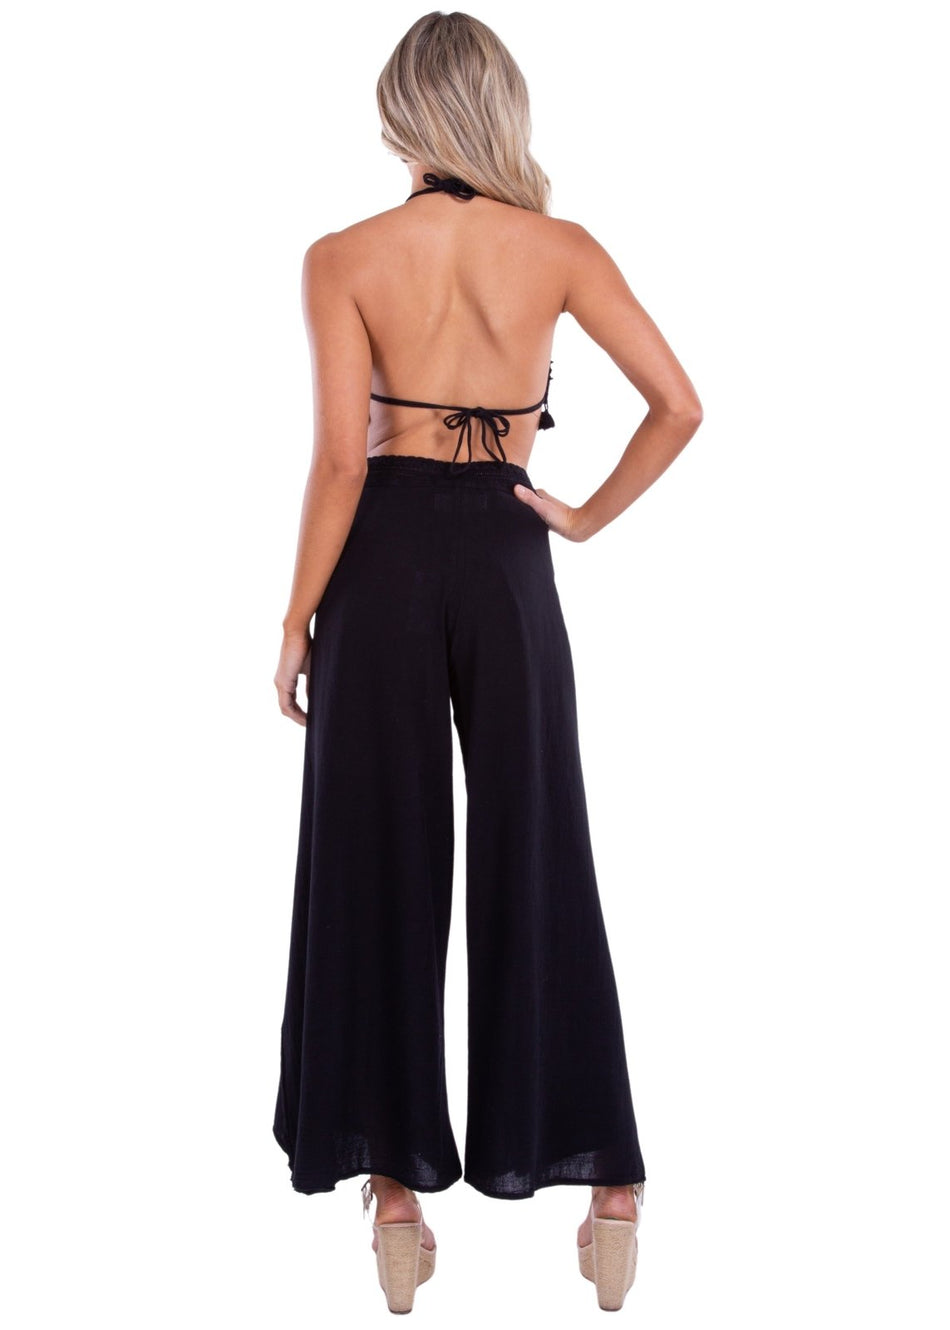  100% Cotton 'Alaia' Tassel Bikini Top Black - Seaspice Resort Wear